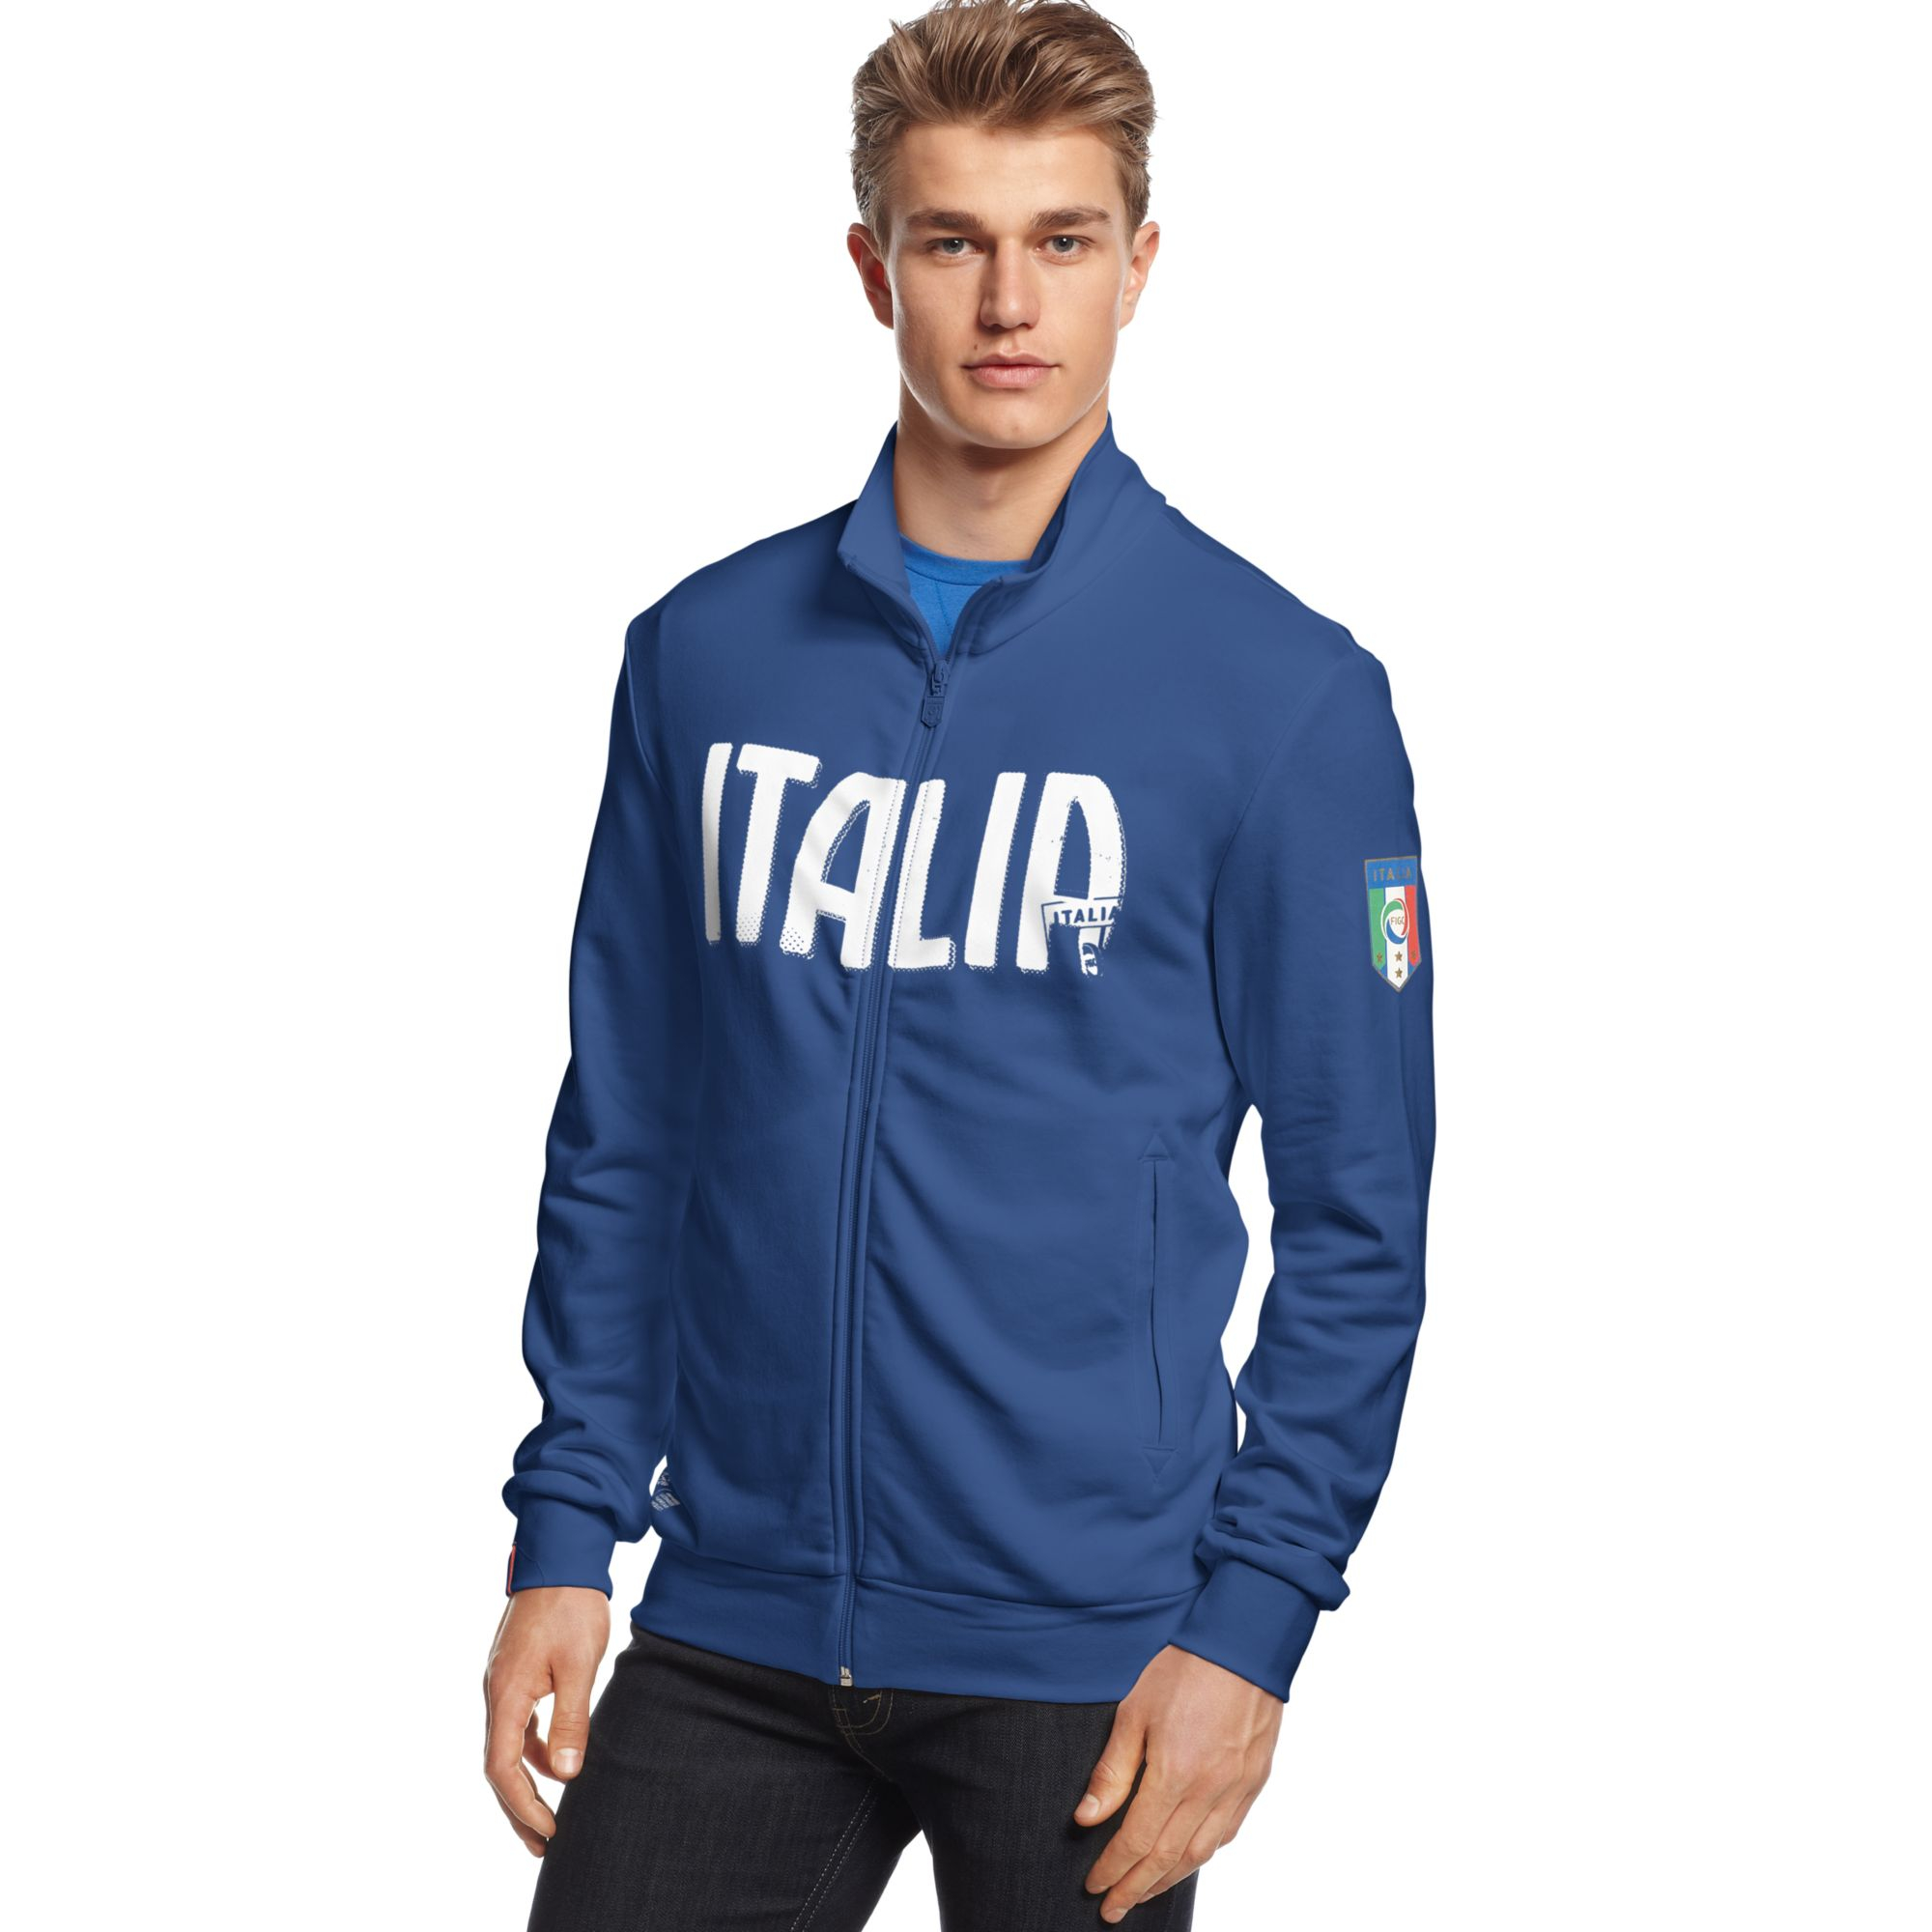 PUMA Figc Italia Track Jacket in Blue for Men - Lyst